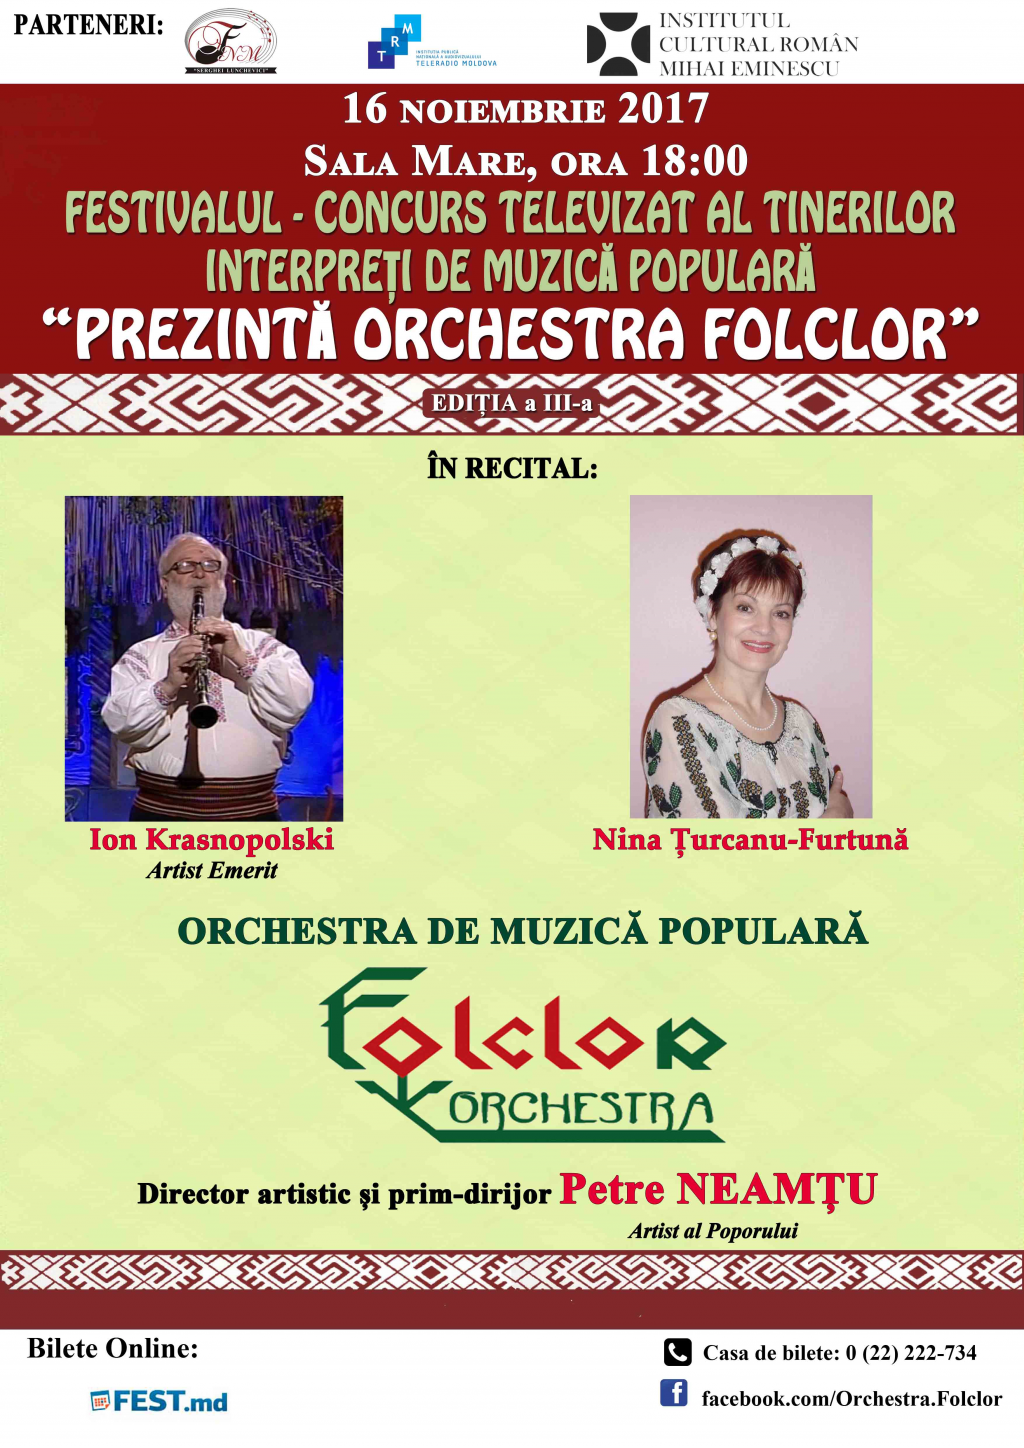 Festivalul  Prezinta Orchestra FOLCLOR, etapa III-a